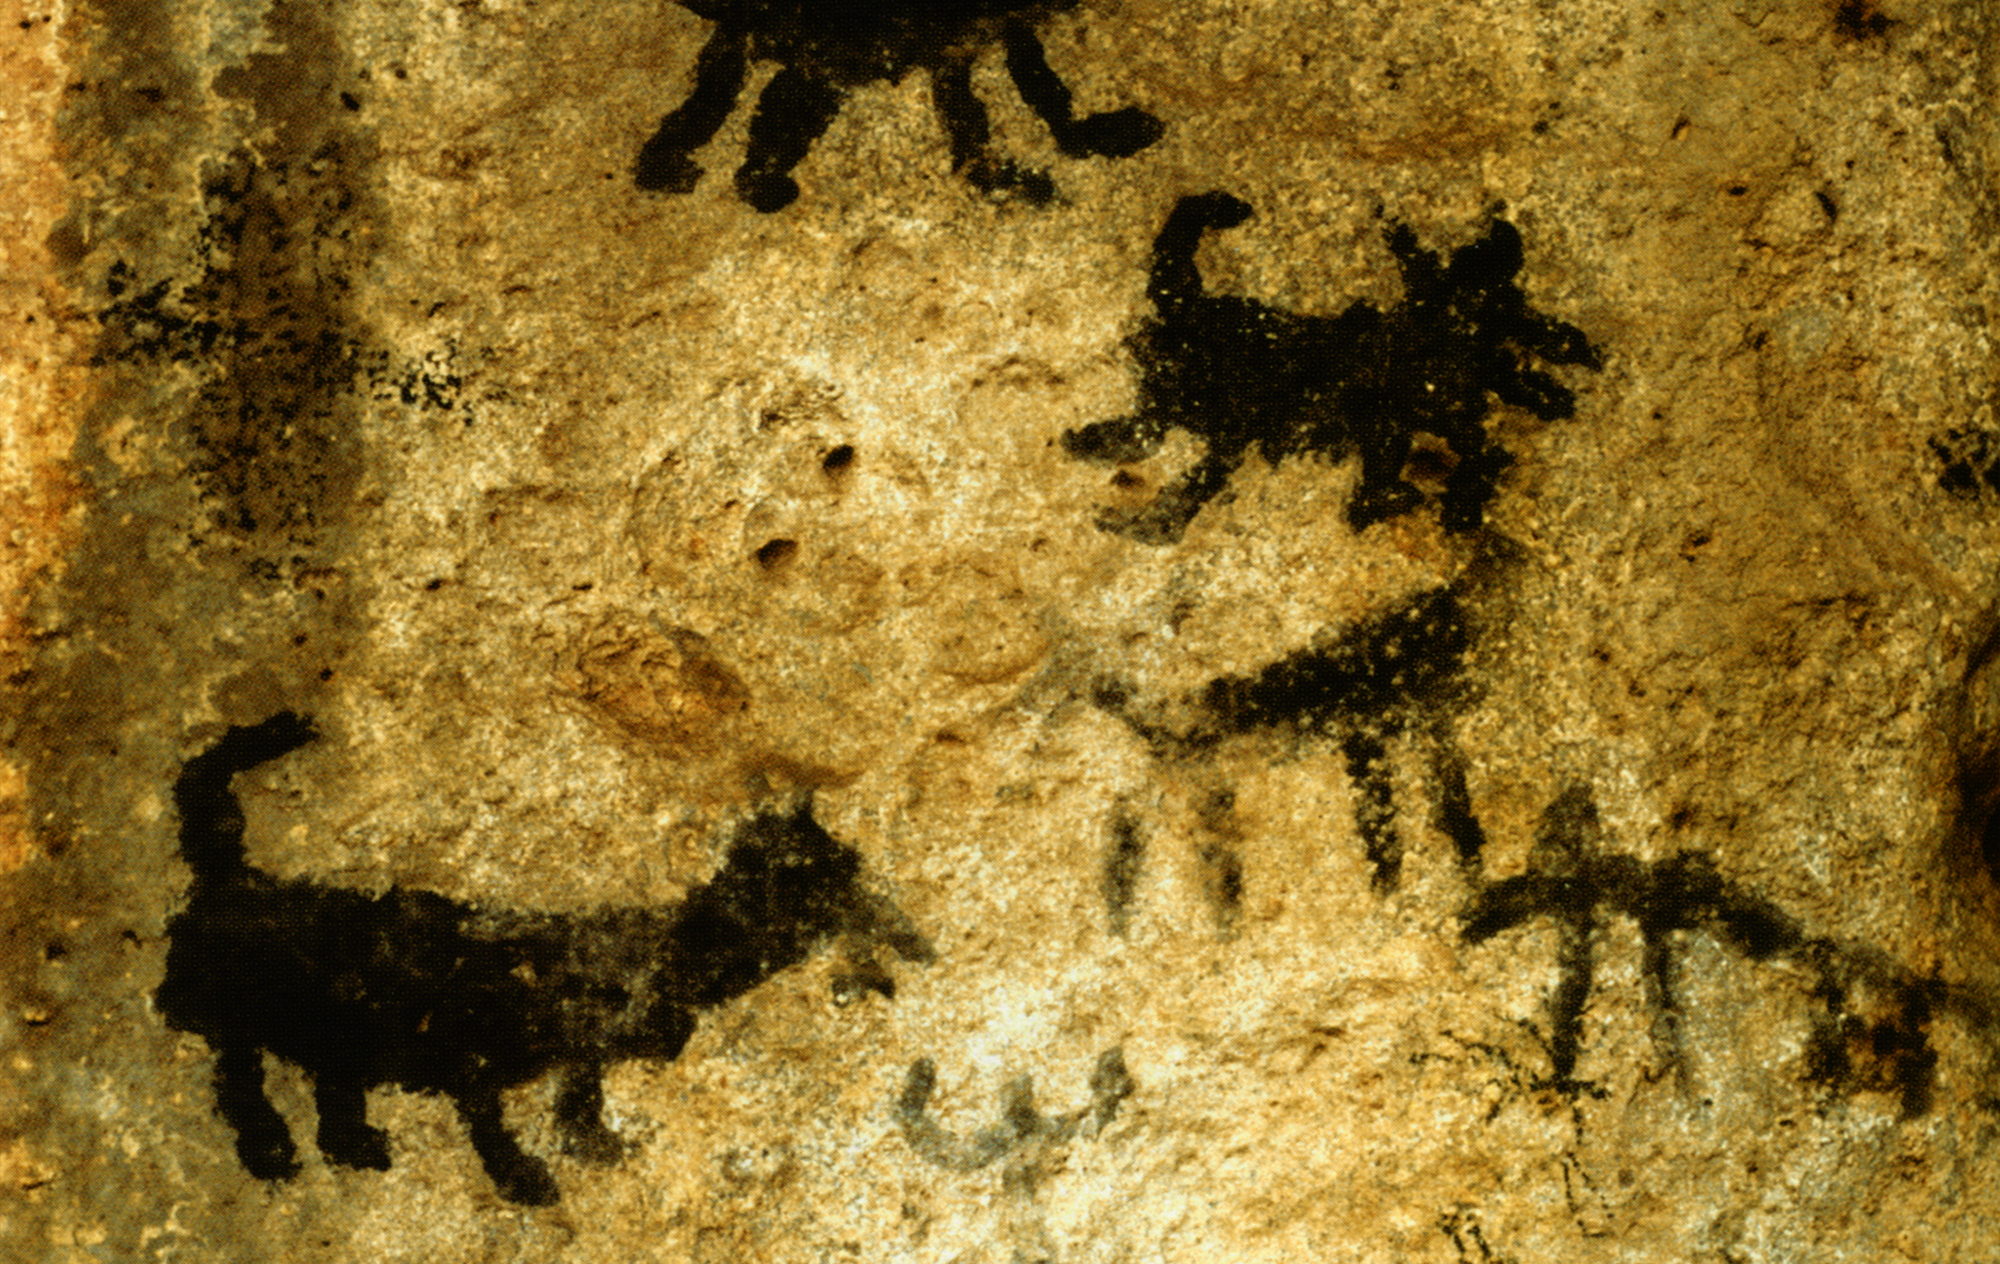 Arizona Rock Art Petroglyphs Pictographs Archaeology USA America Bradshaw Foundation Rock Art Network